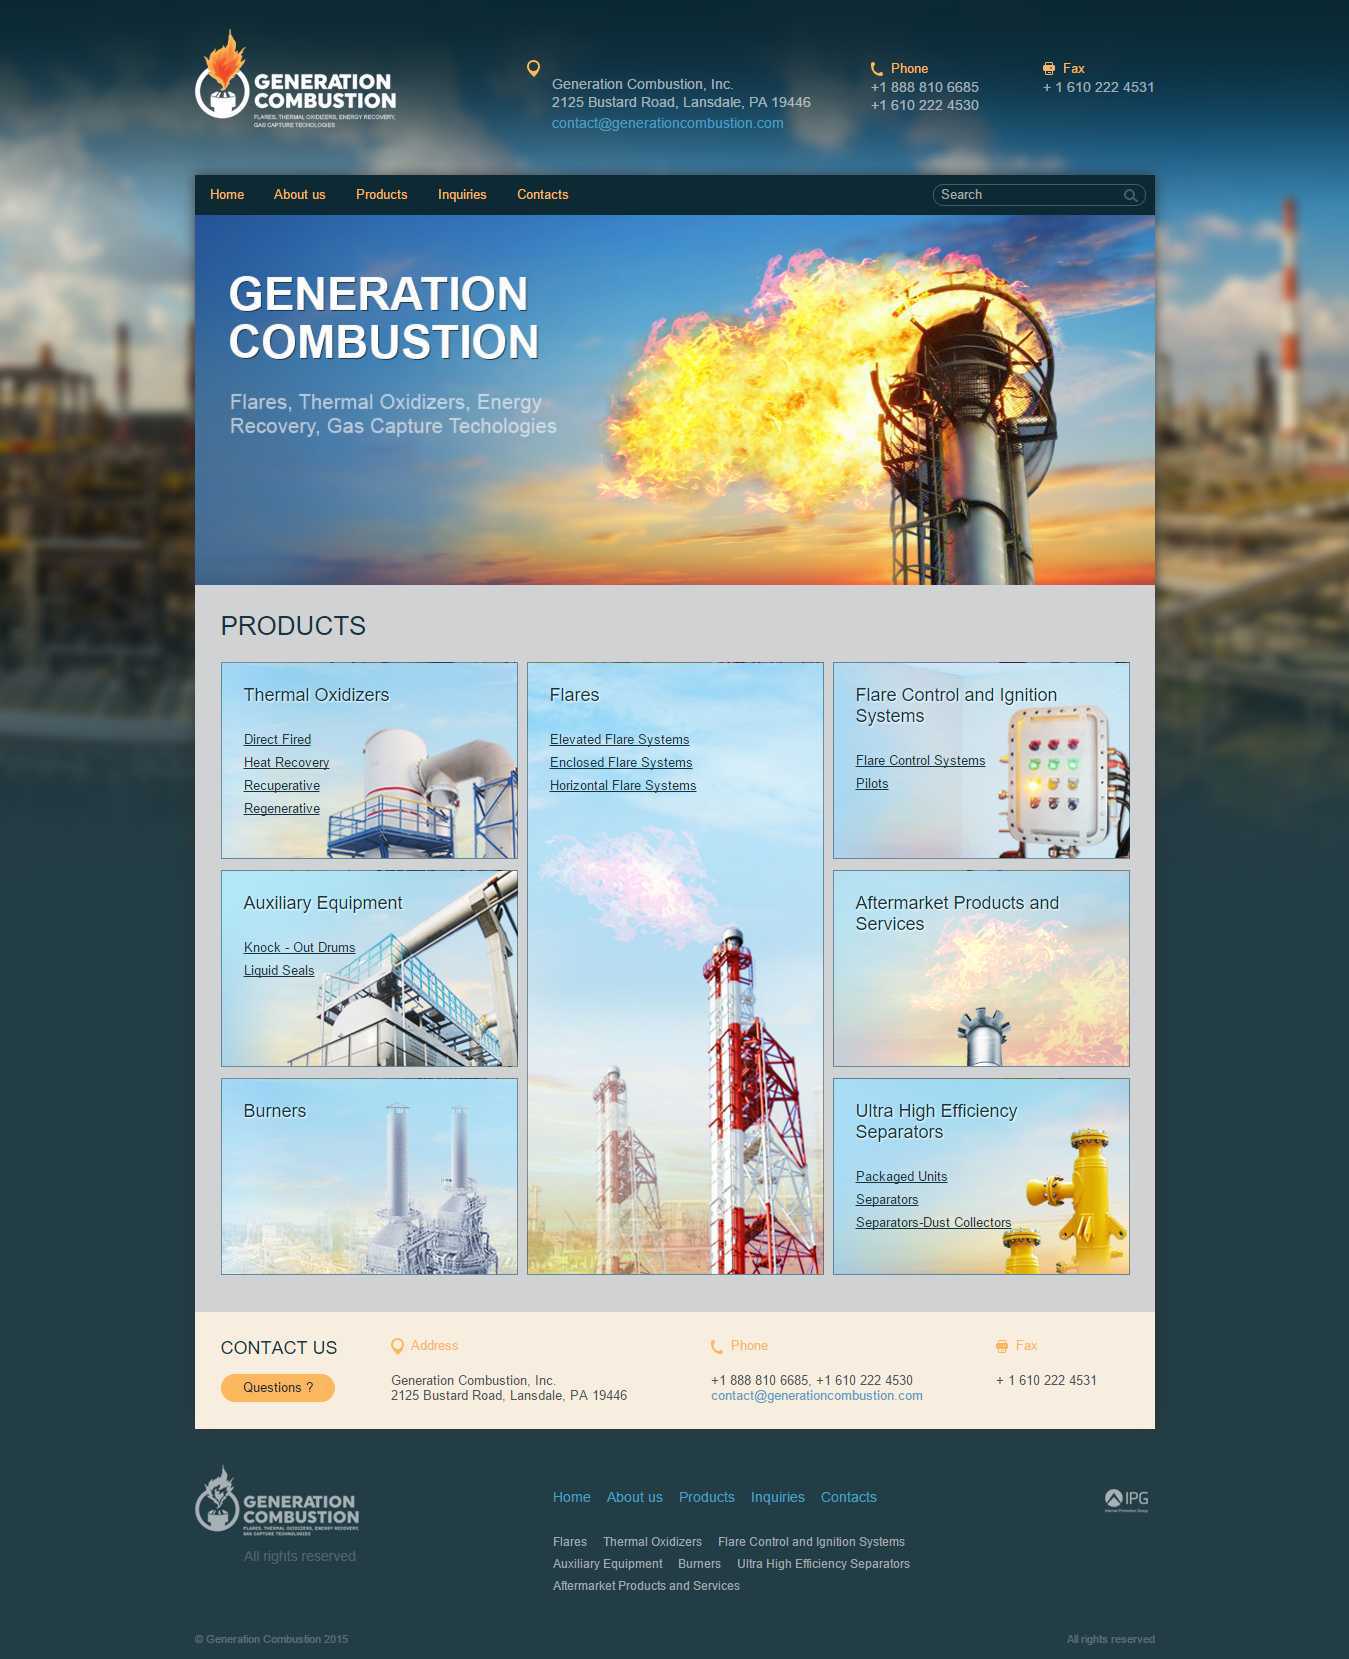 корпоративный сайт компании "generation combustion"